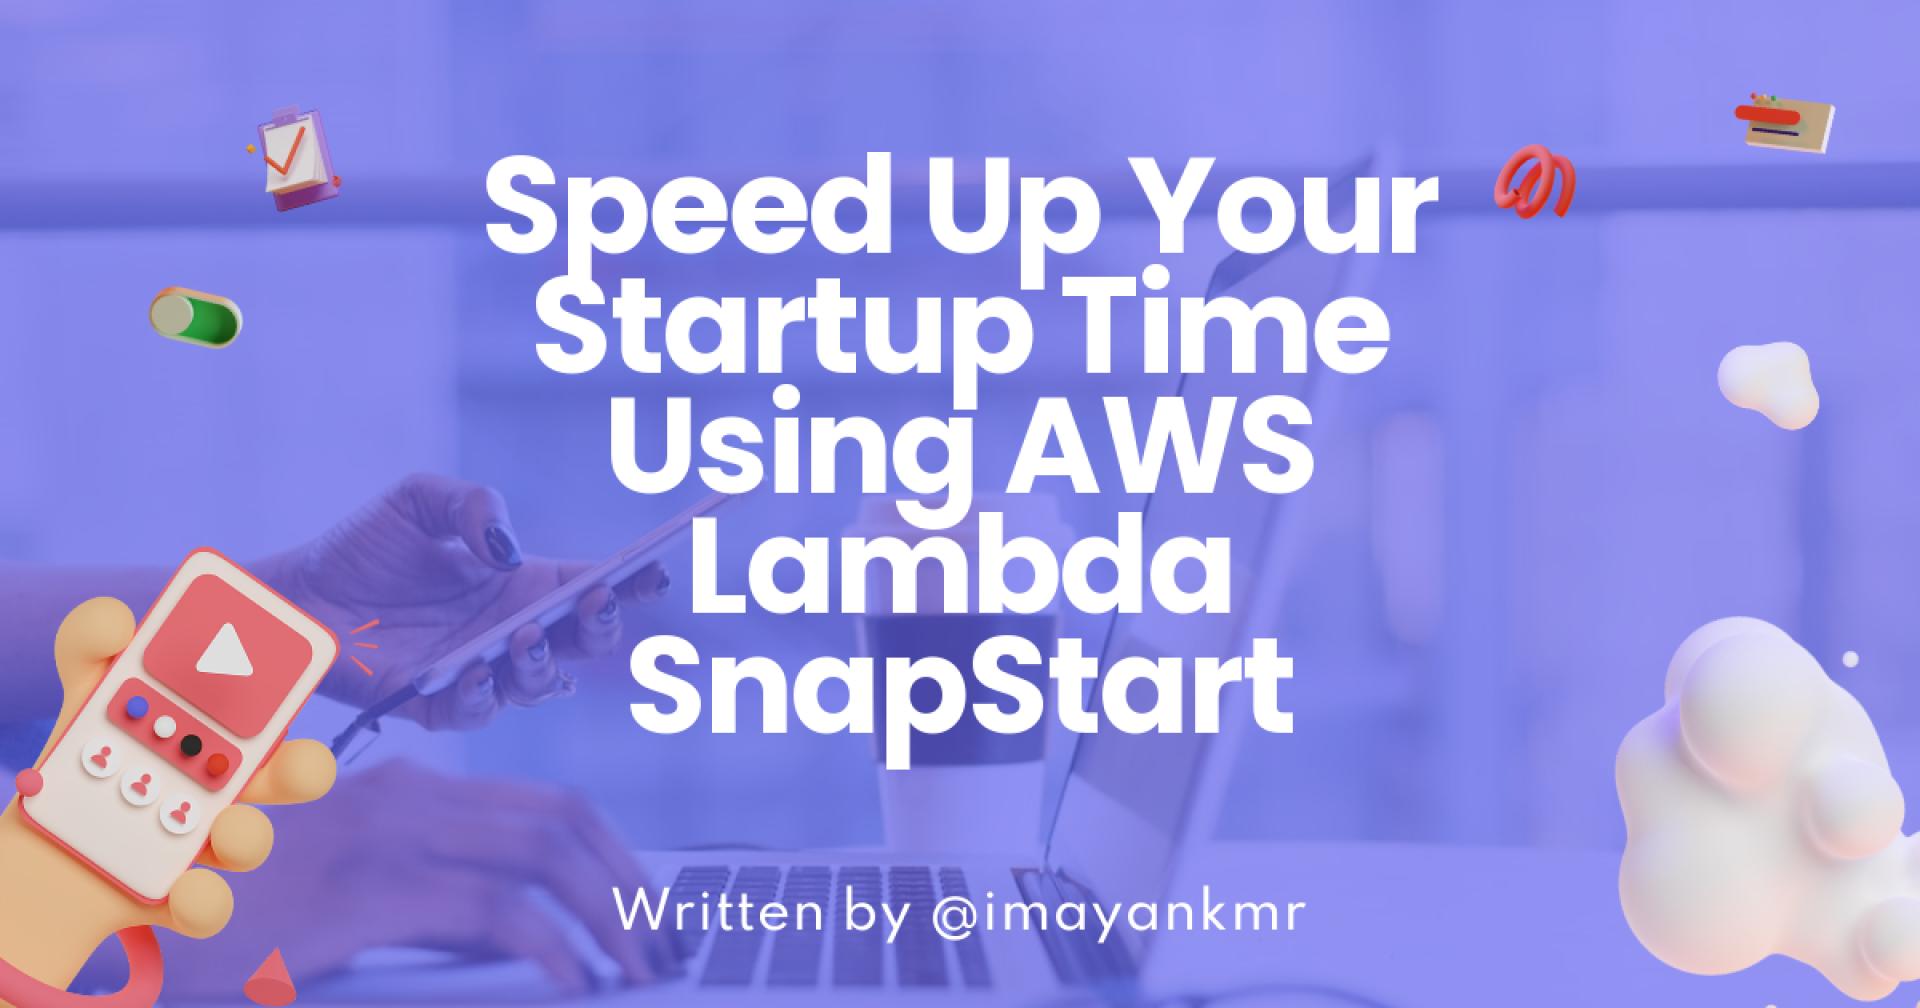 Speed Up Your Startup Time Using AWS Lambda SnapStart